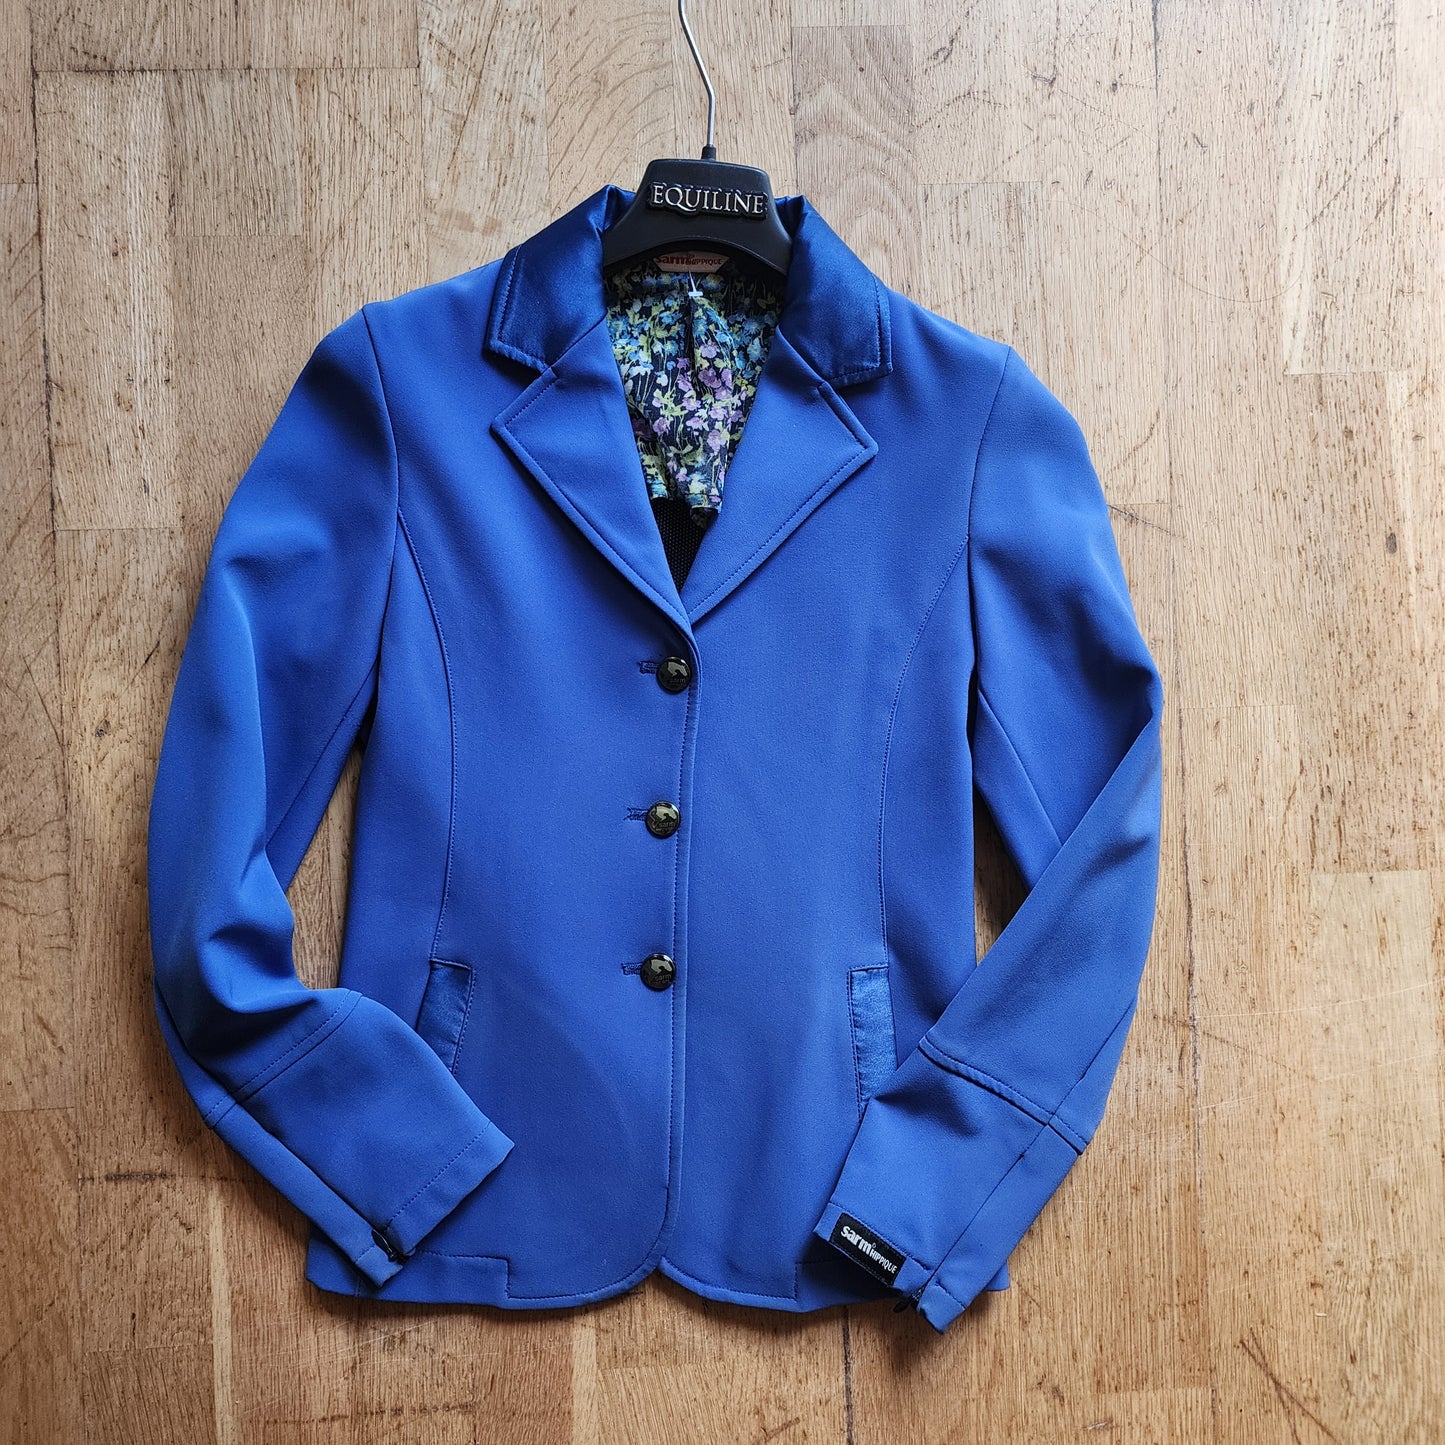 Sarm Hippique blue Show Jacket (girls size 10)